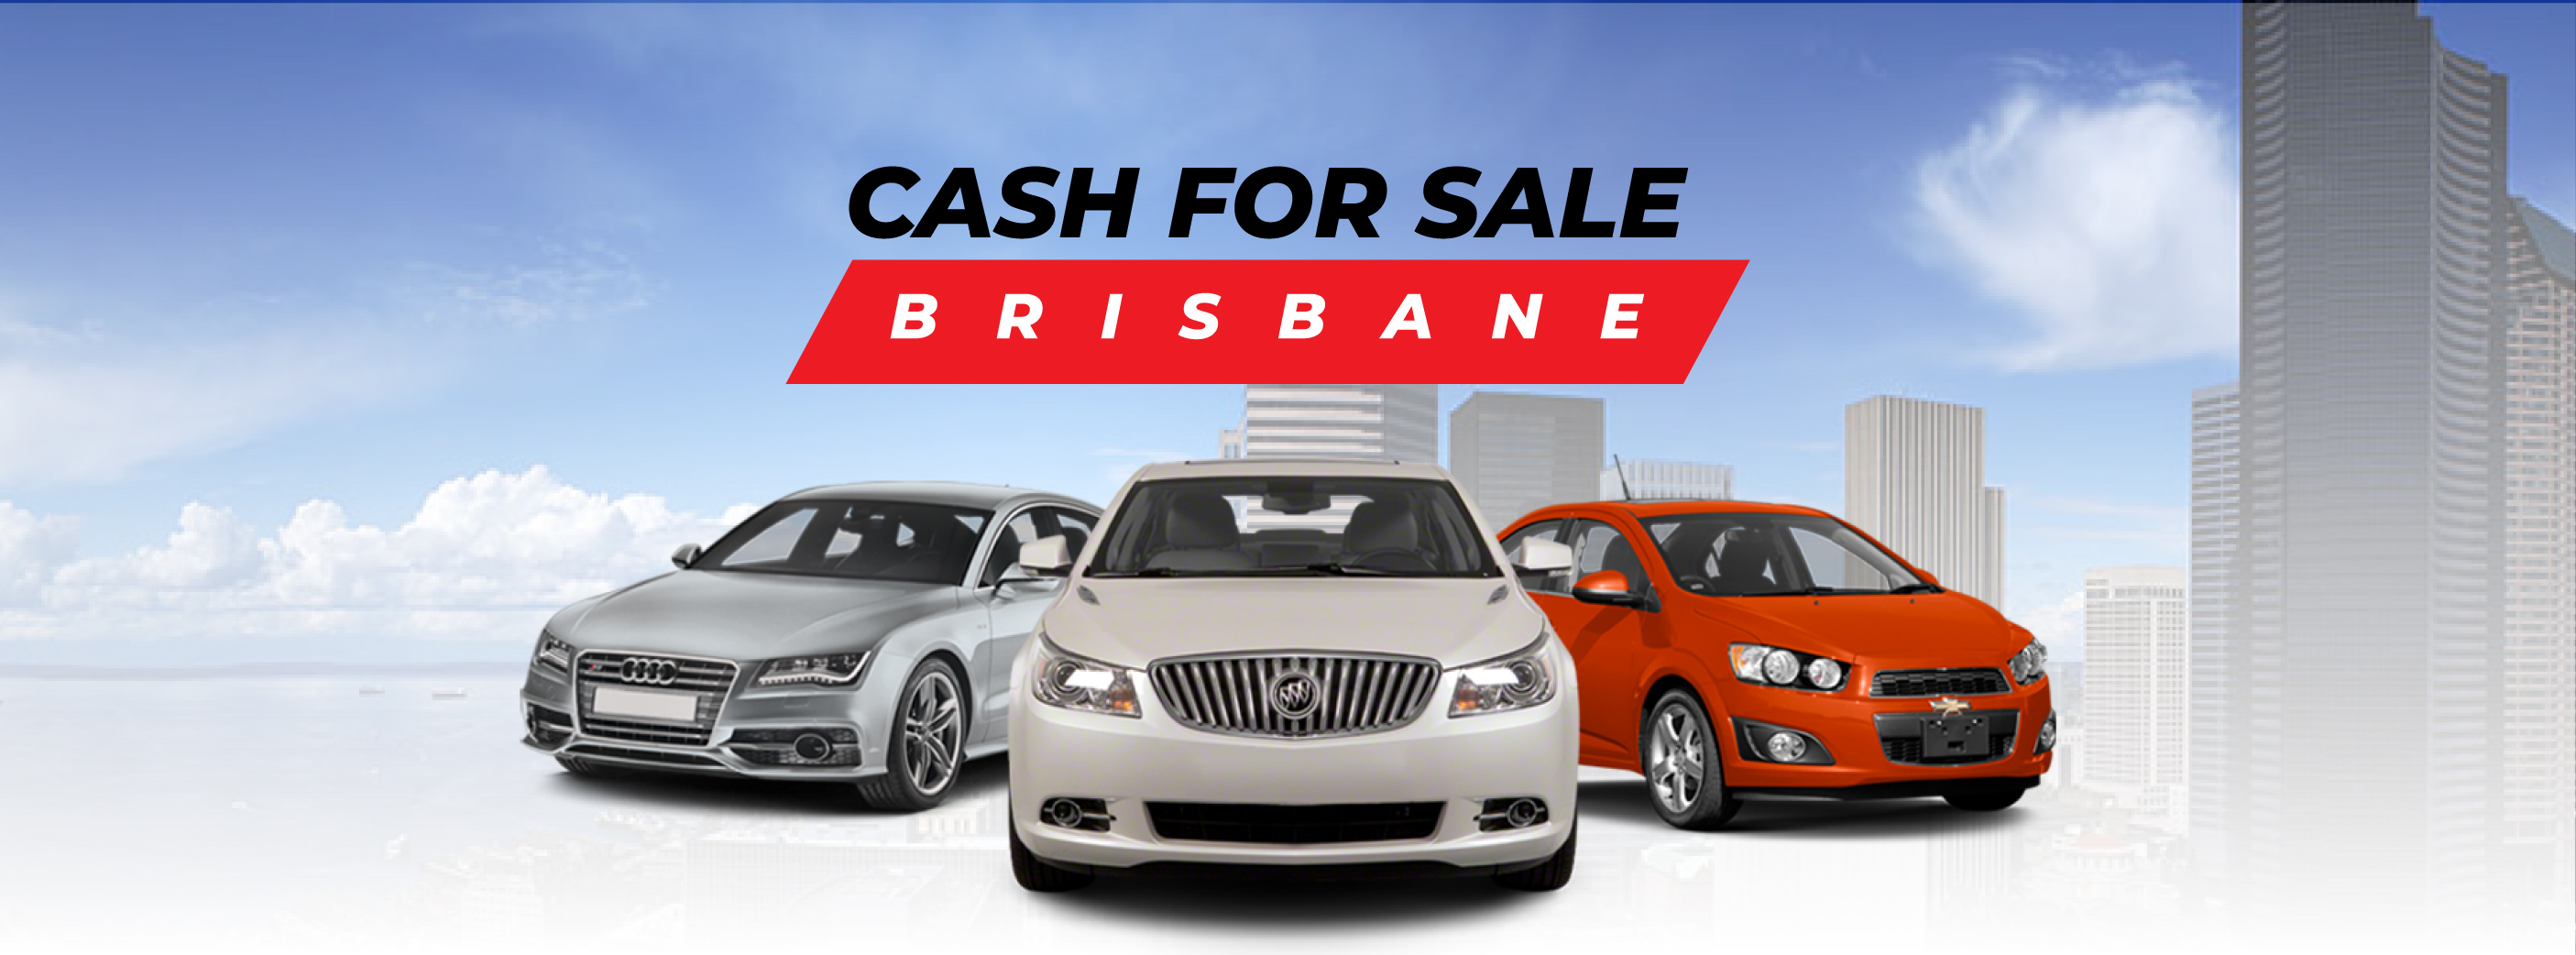 Sell cash for car Brisbane